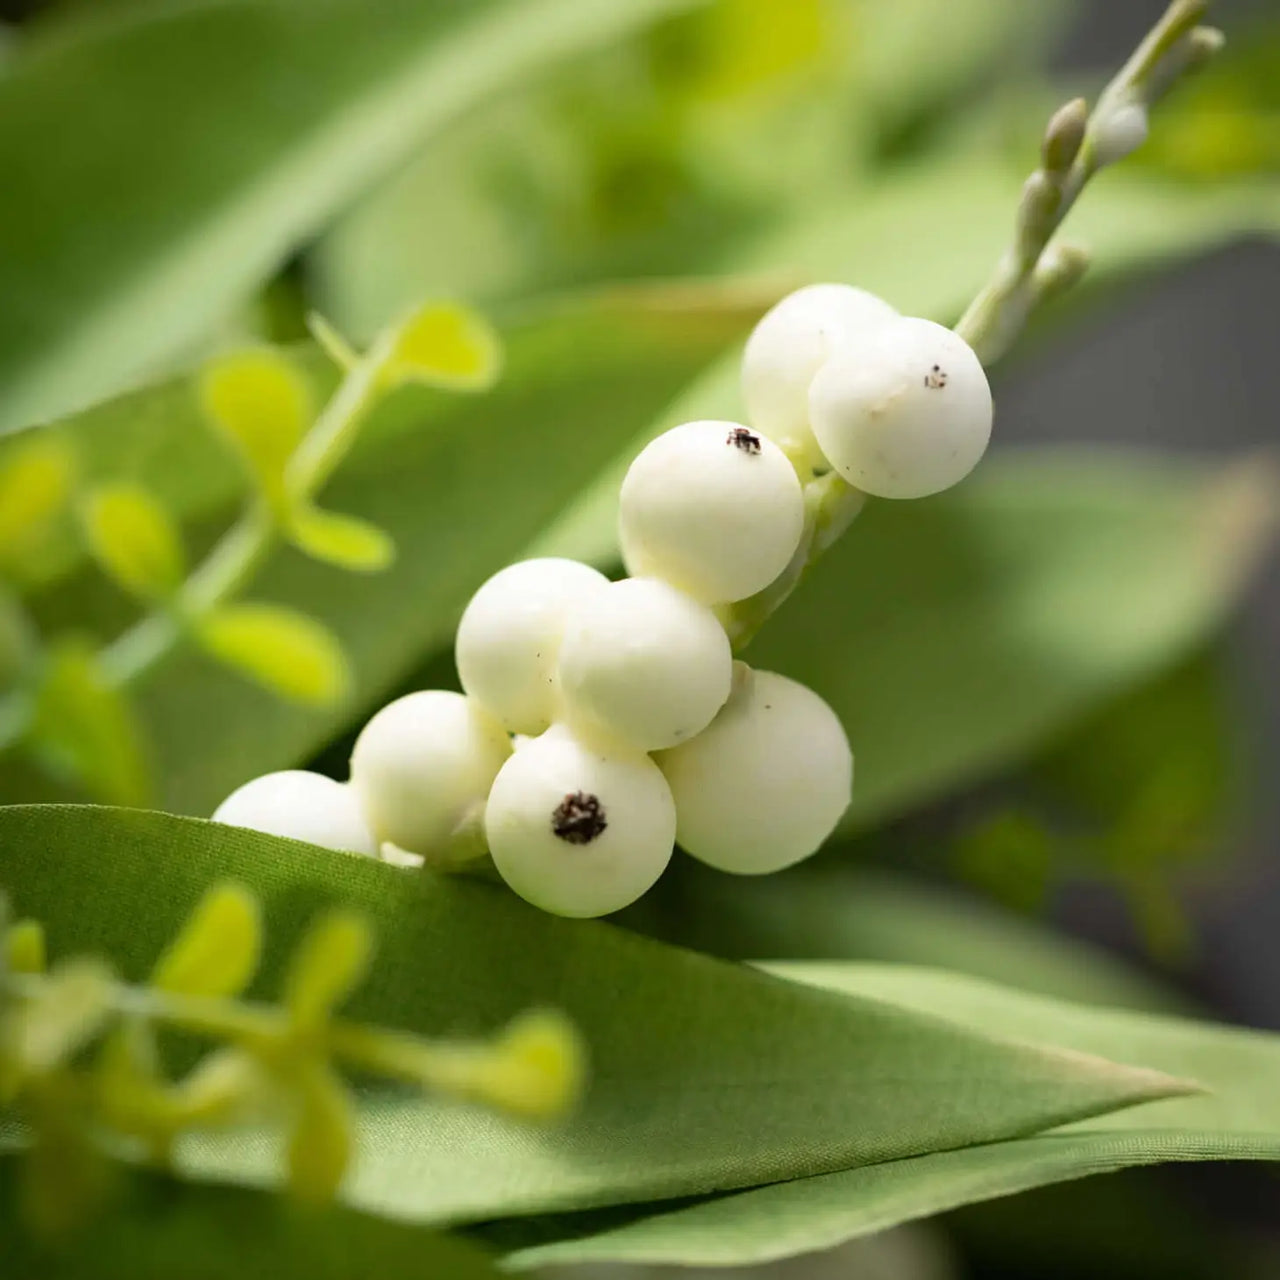 Pearl White Snowberry Wreath  Sullivans   